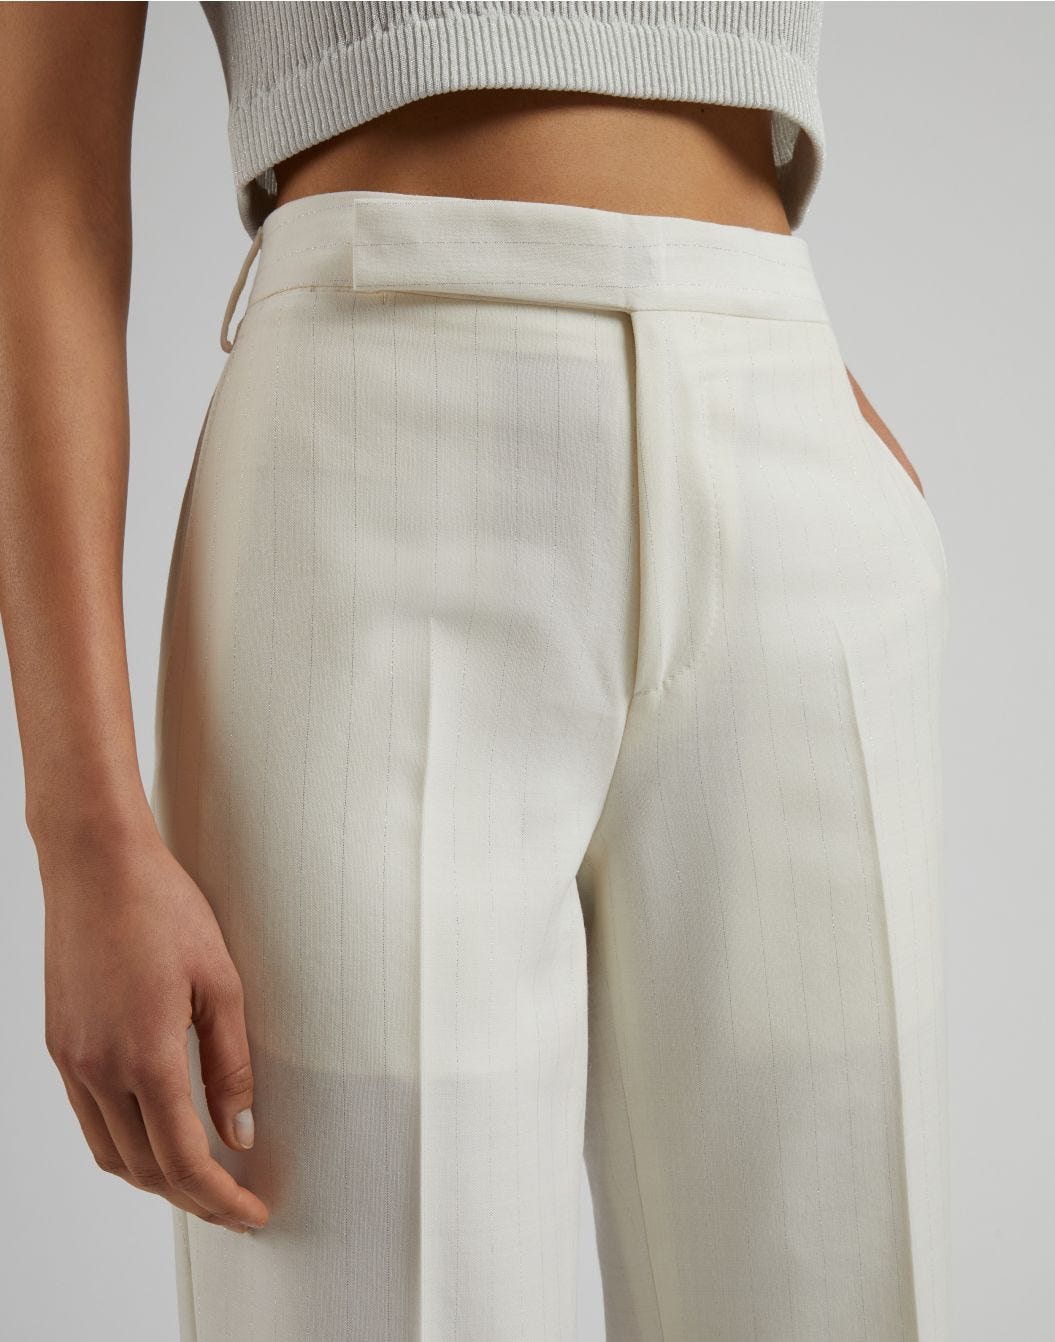 Pantalone in tela di lana gessata lurex bianco-argento